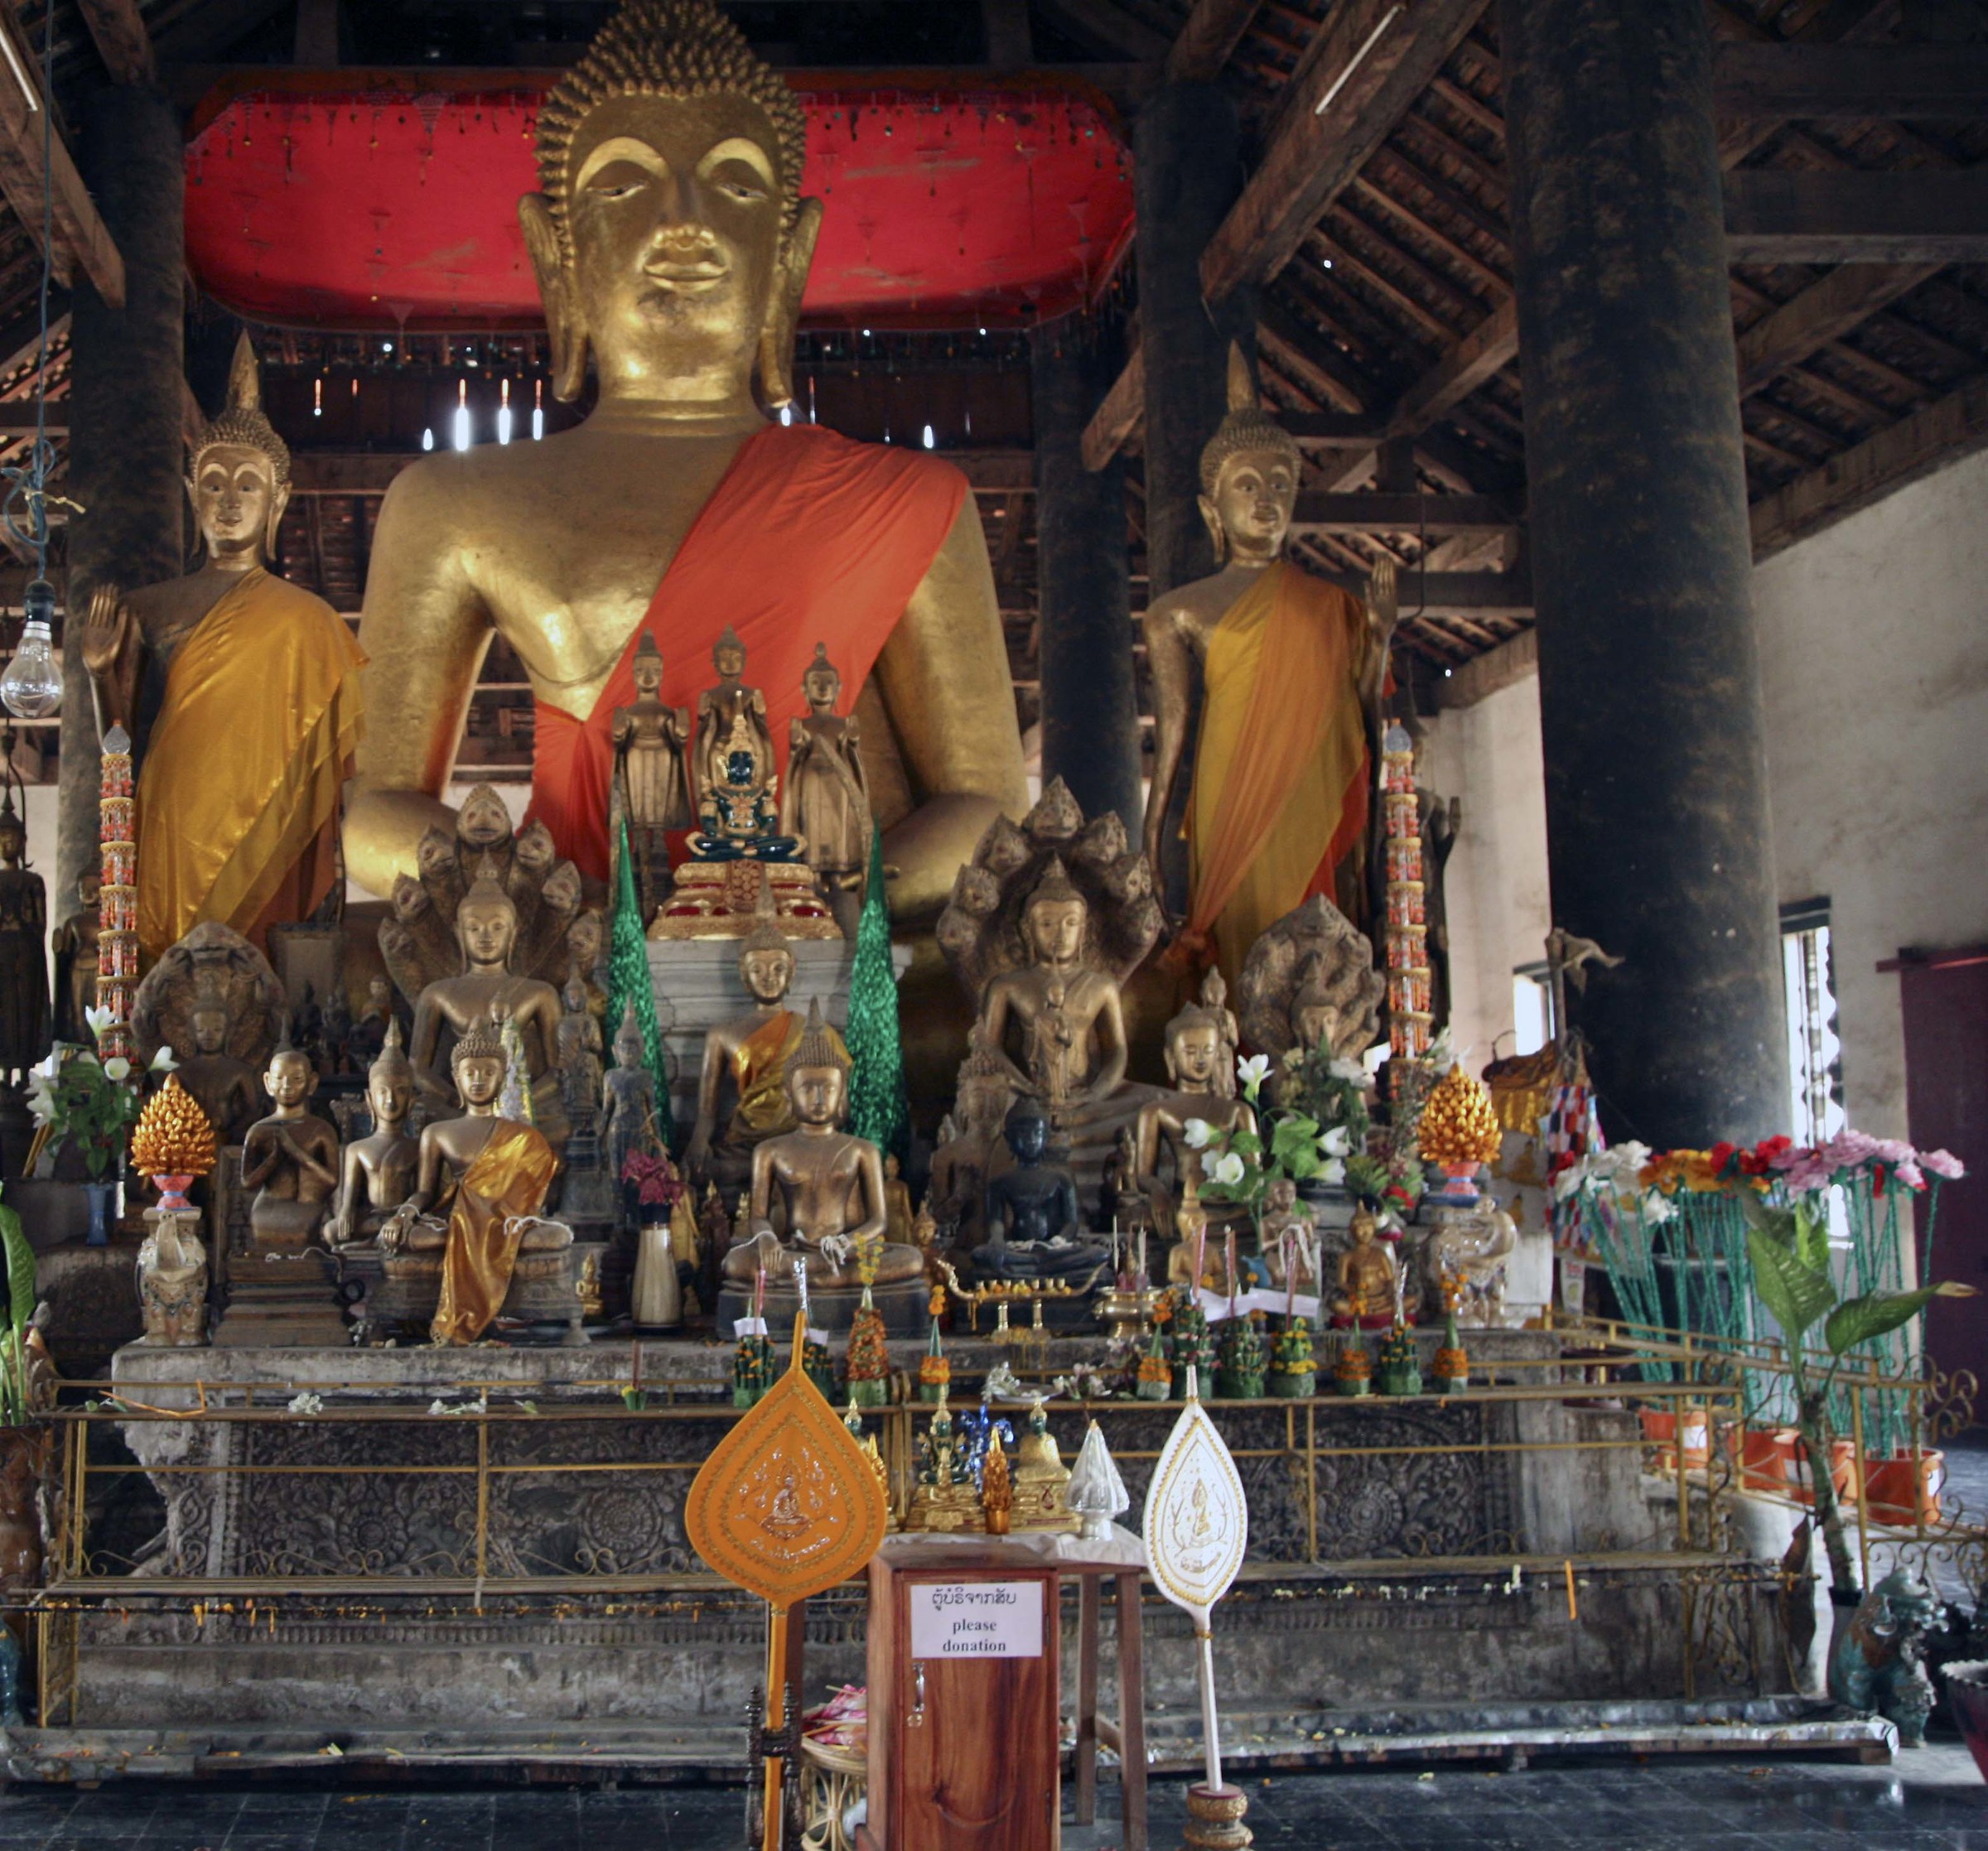 Inside the temple - Laos...